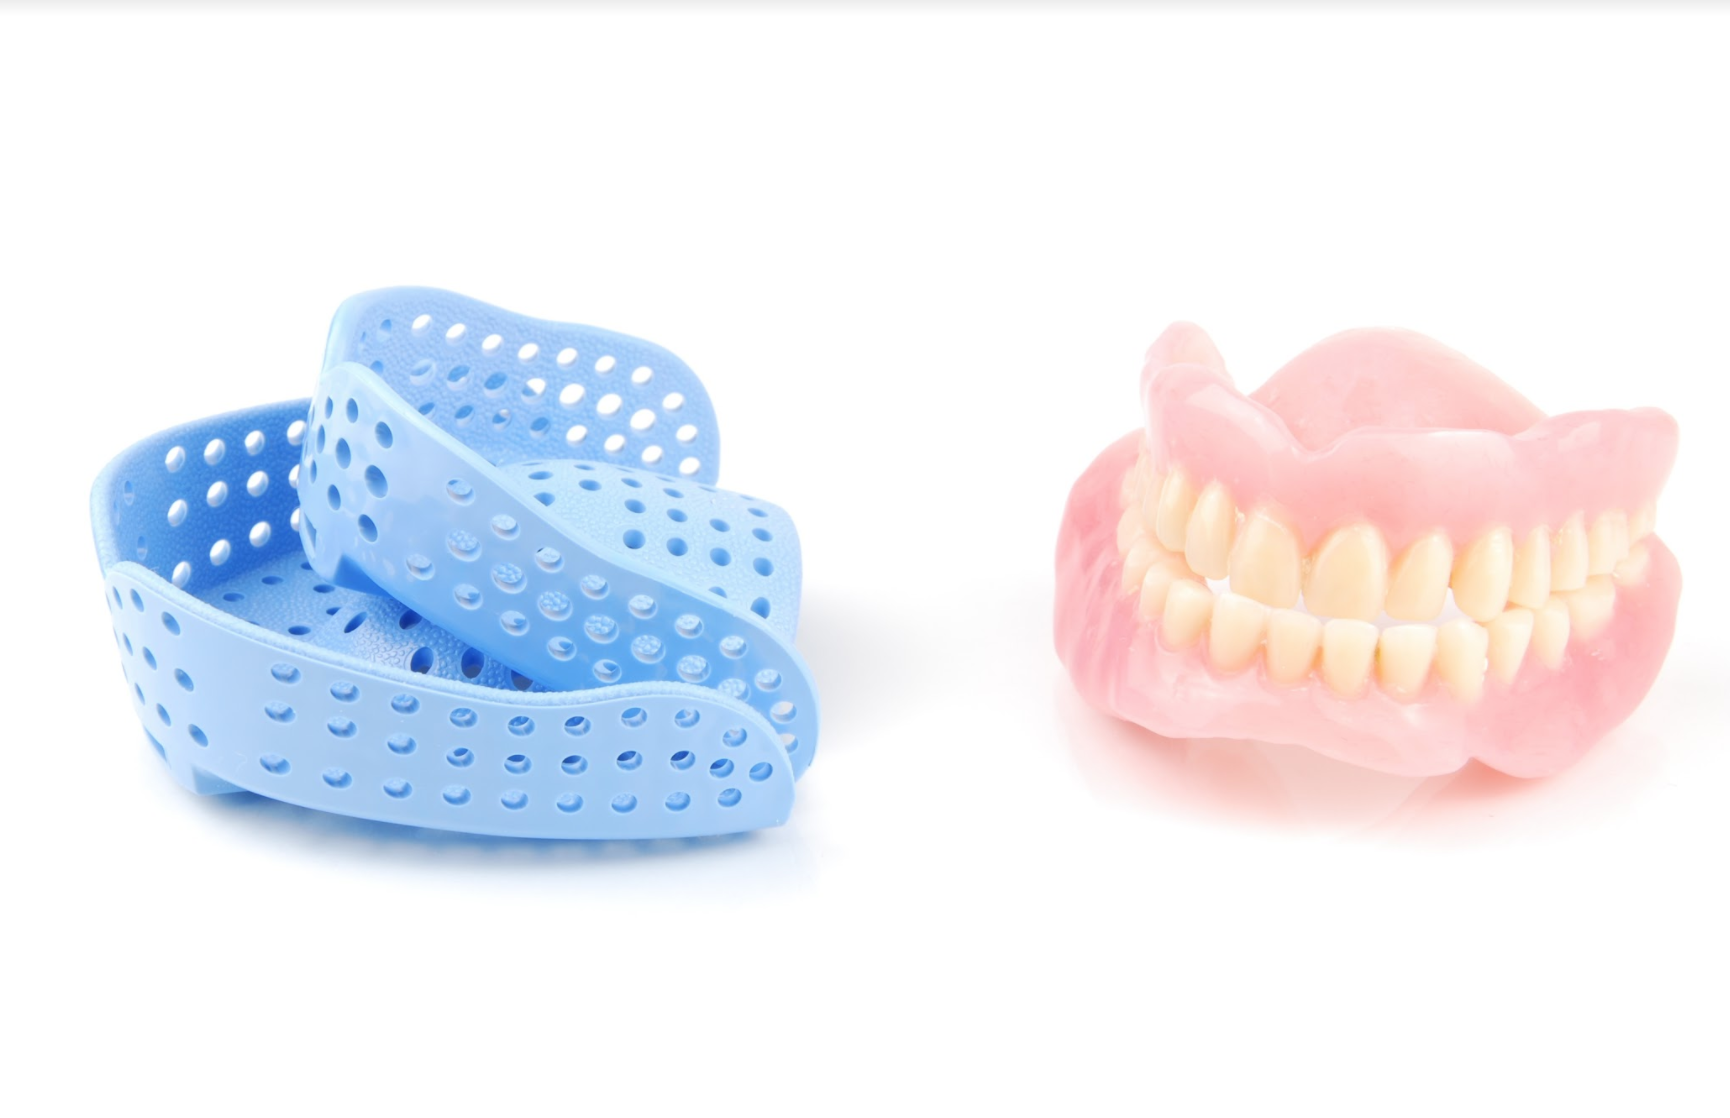 types of dentures